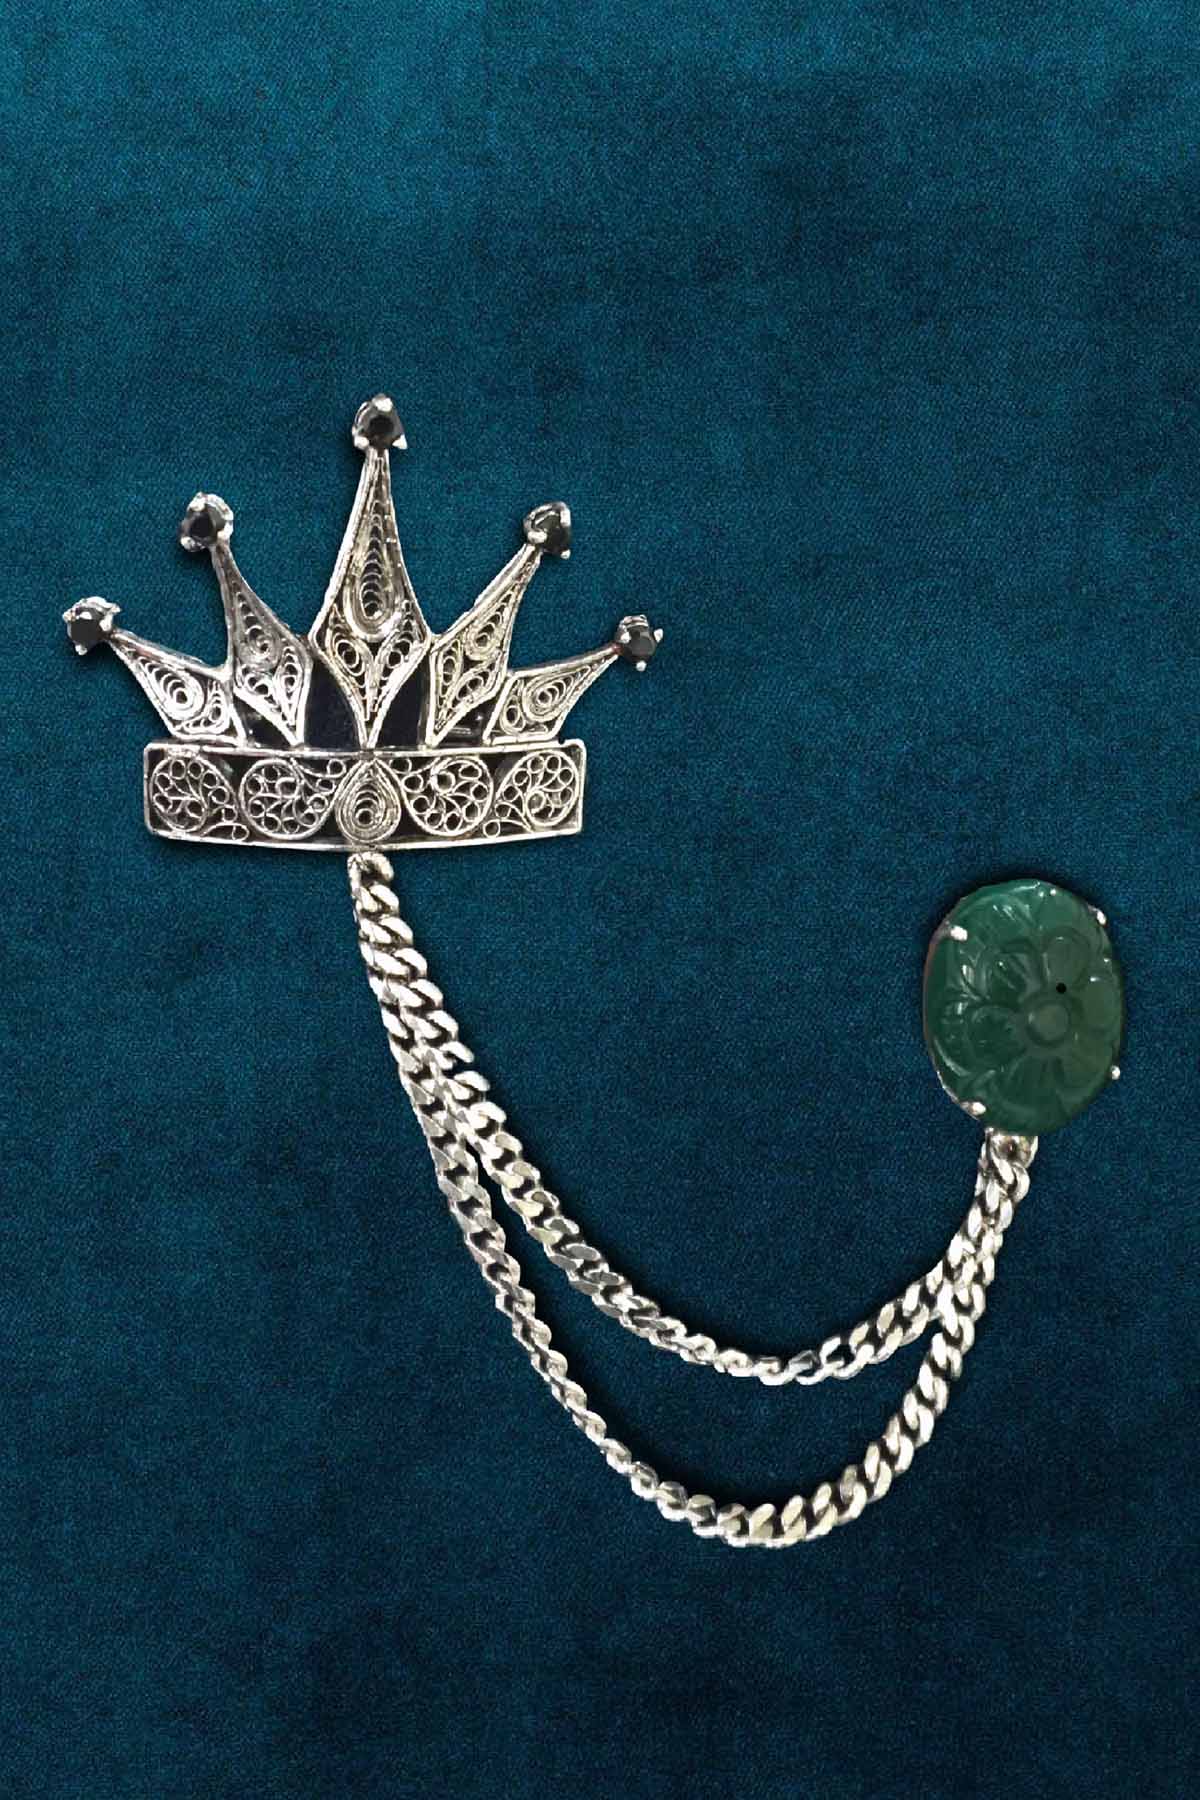 Green Quartz Crown Brooch